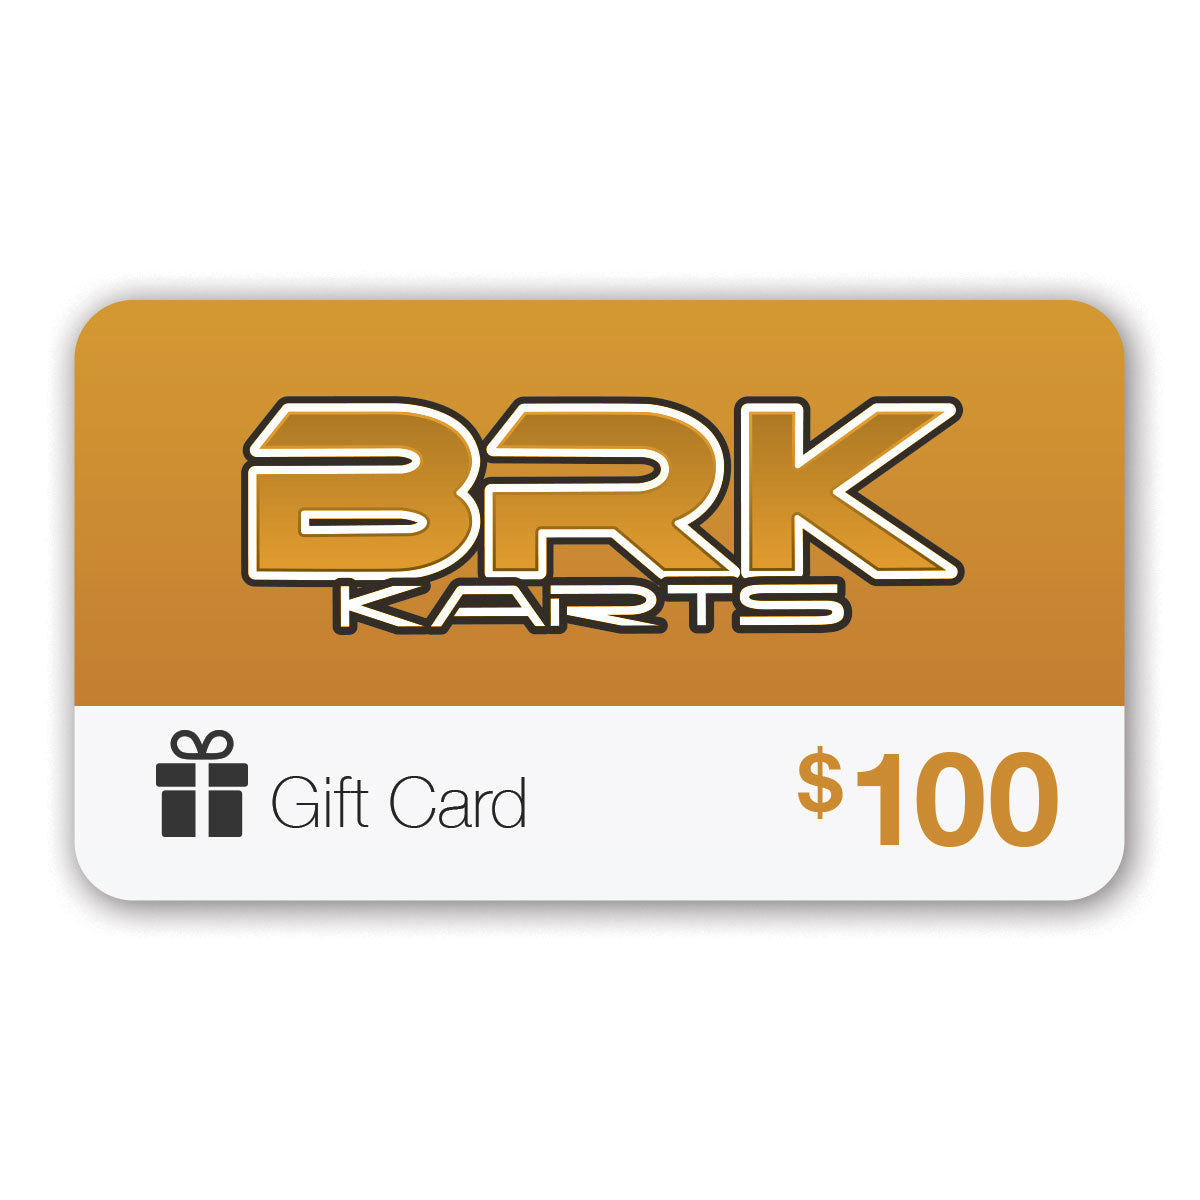 BRK Karts Gift Card - $100